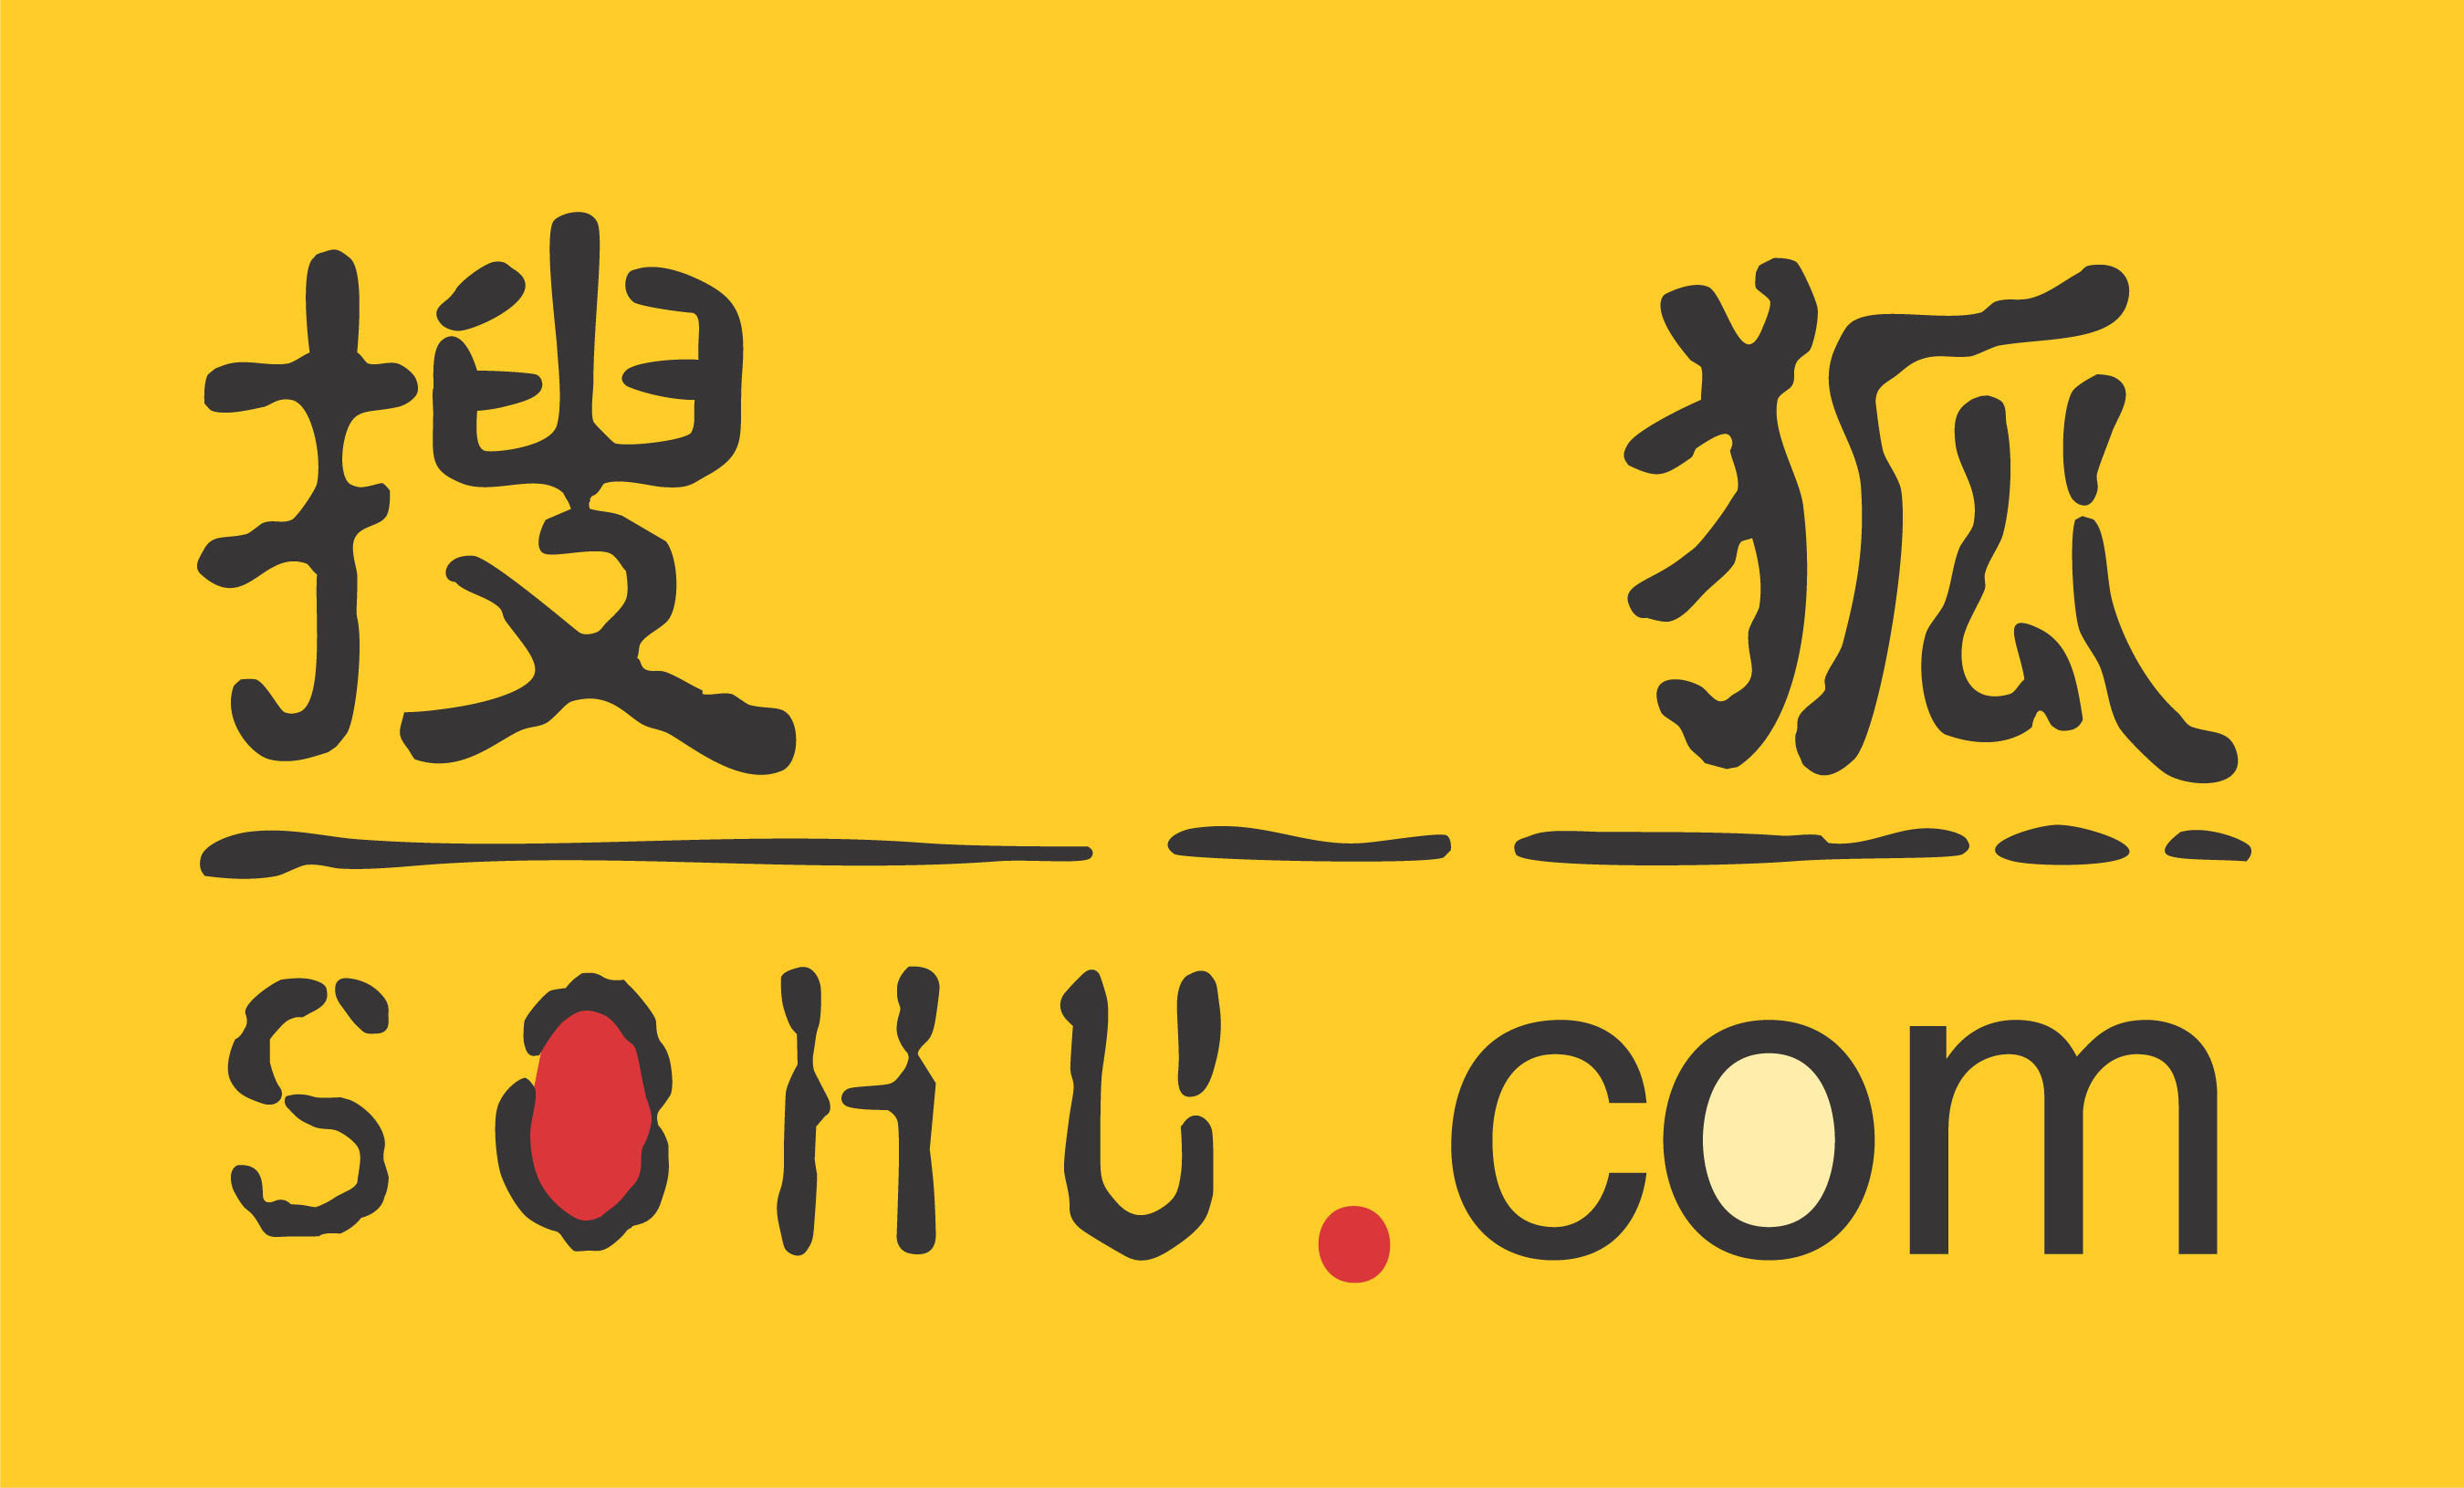 Sohu logo. (PRNewsFoto/Sohu.com Inc.) (PRNewsFoto/)